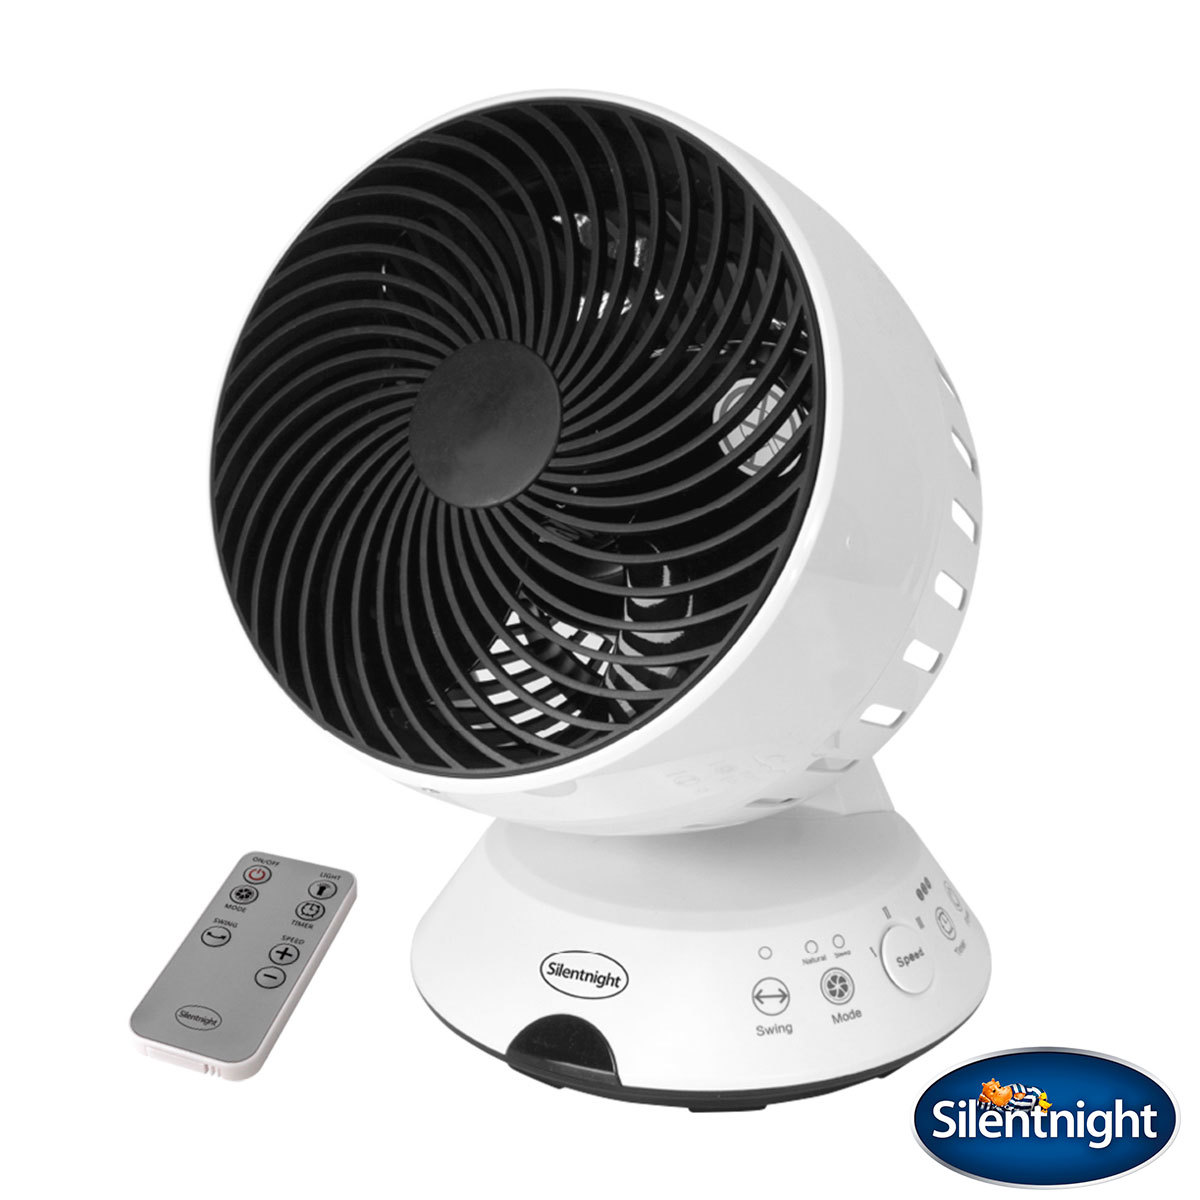 Fan-Silent night Oscillating Turbo Fan-provides perfect cool temp in the heat 